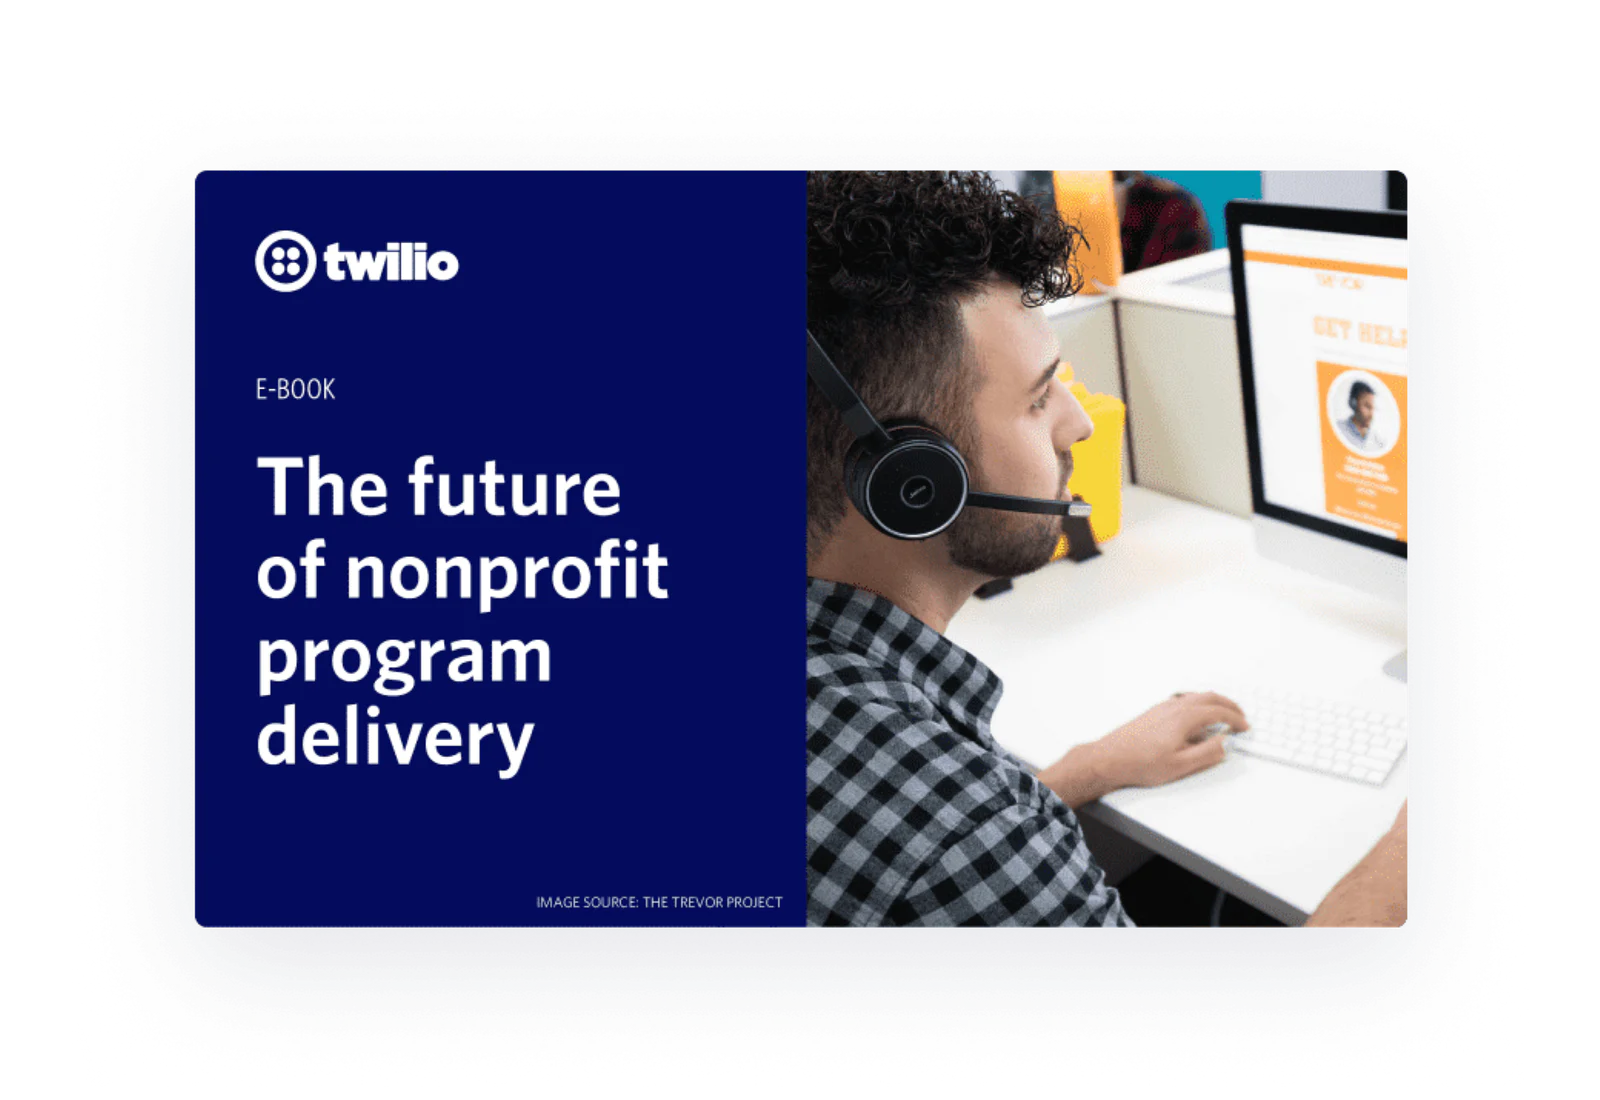 The future of nonprofit program delivery